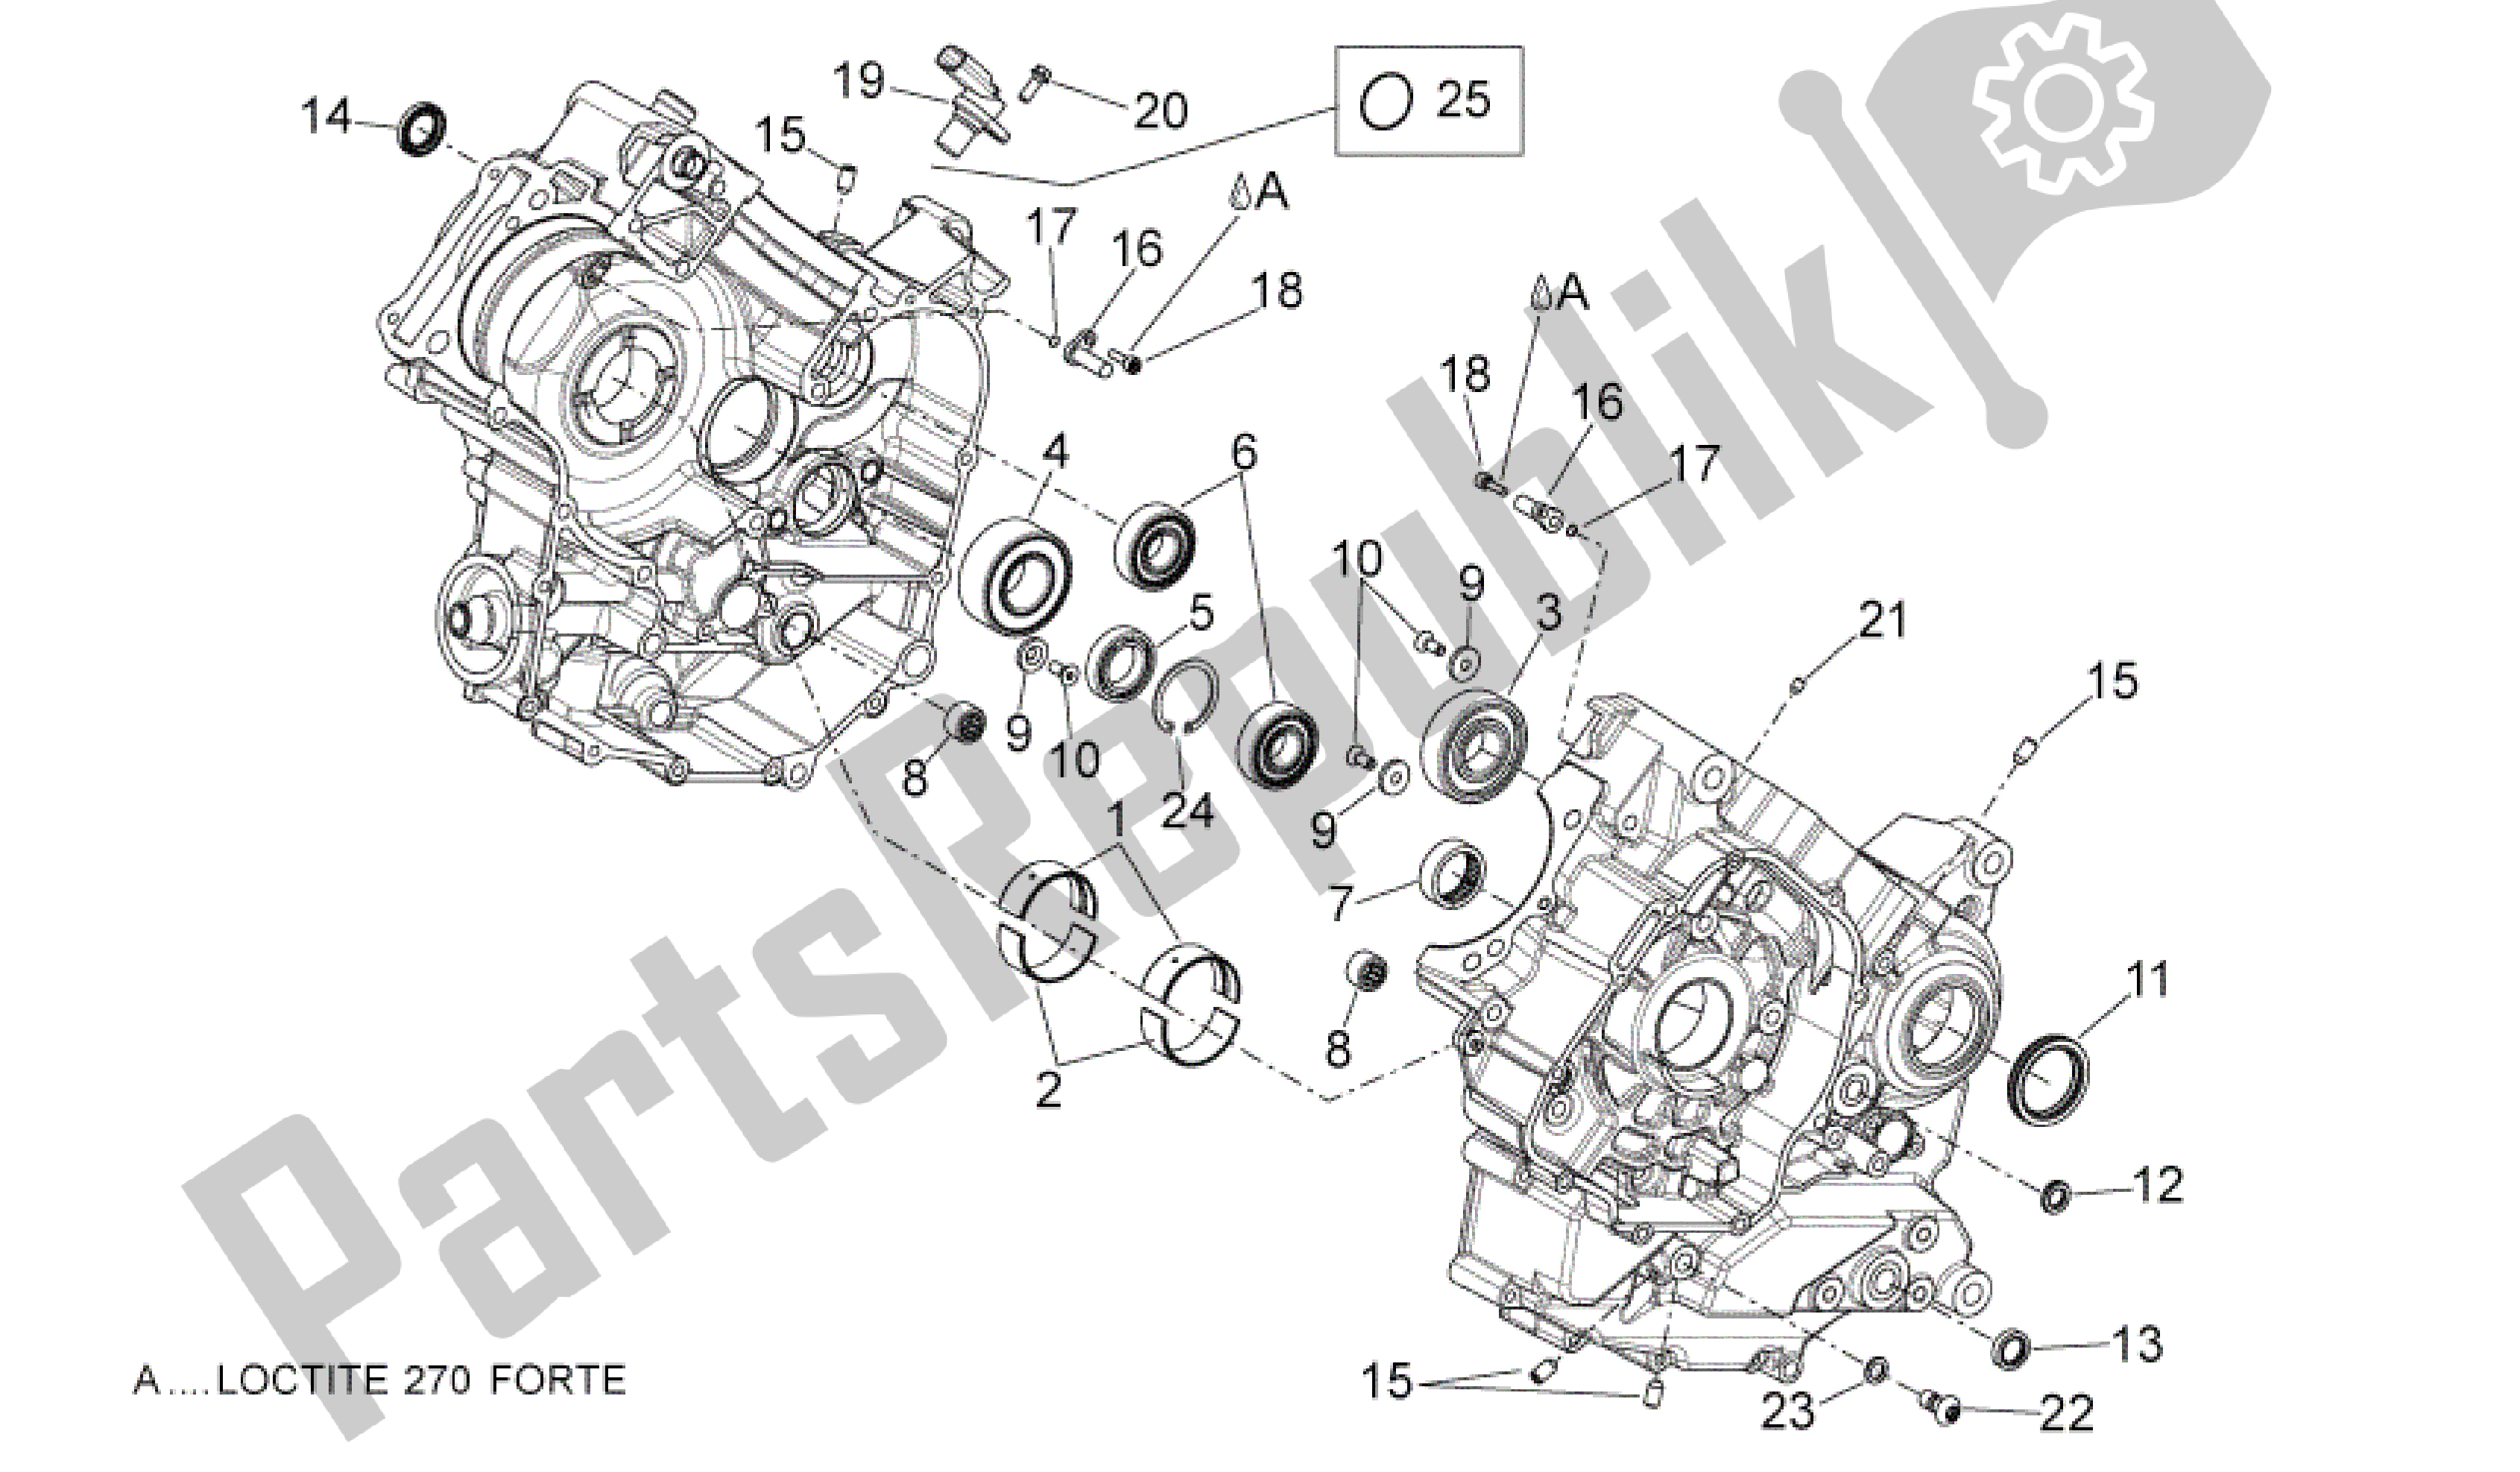 All parts for the Crankcases Ii of the Aprilia Shiver 750 2007 - 2009